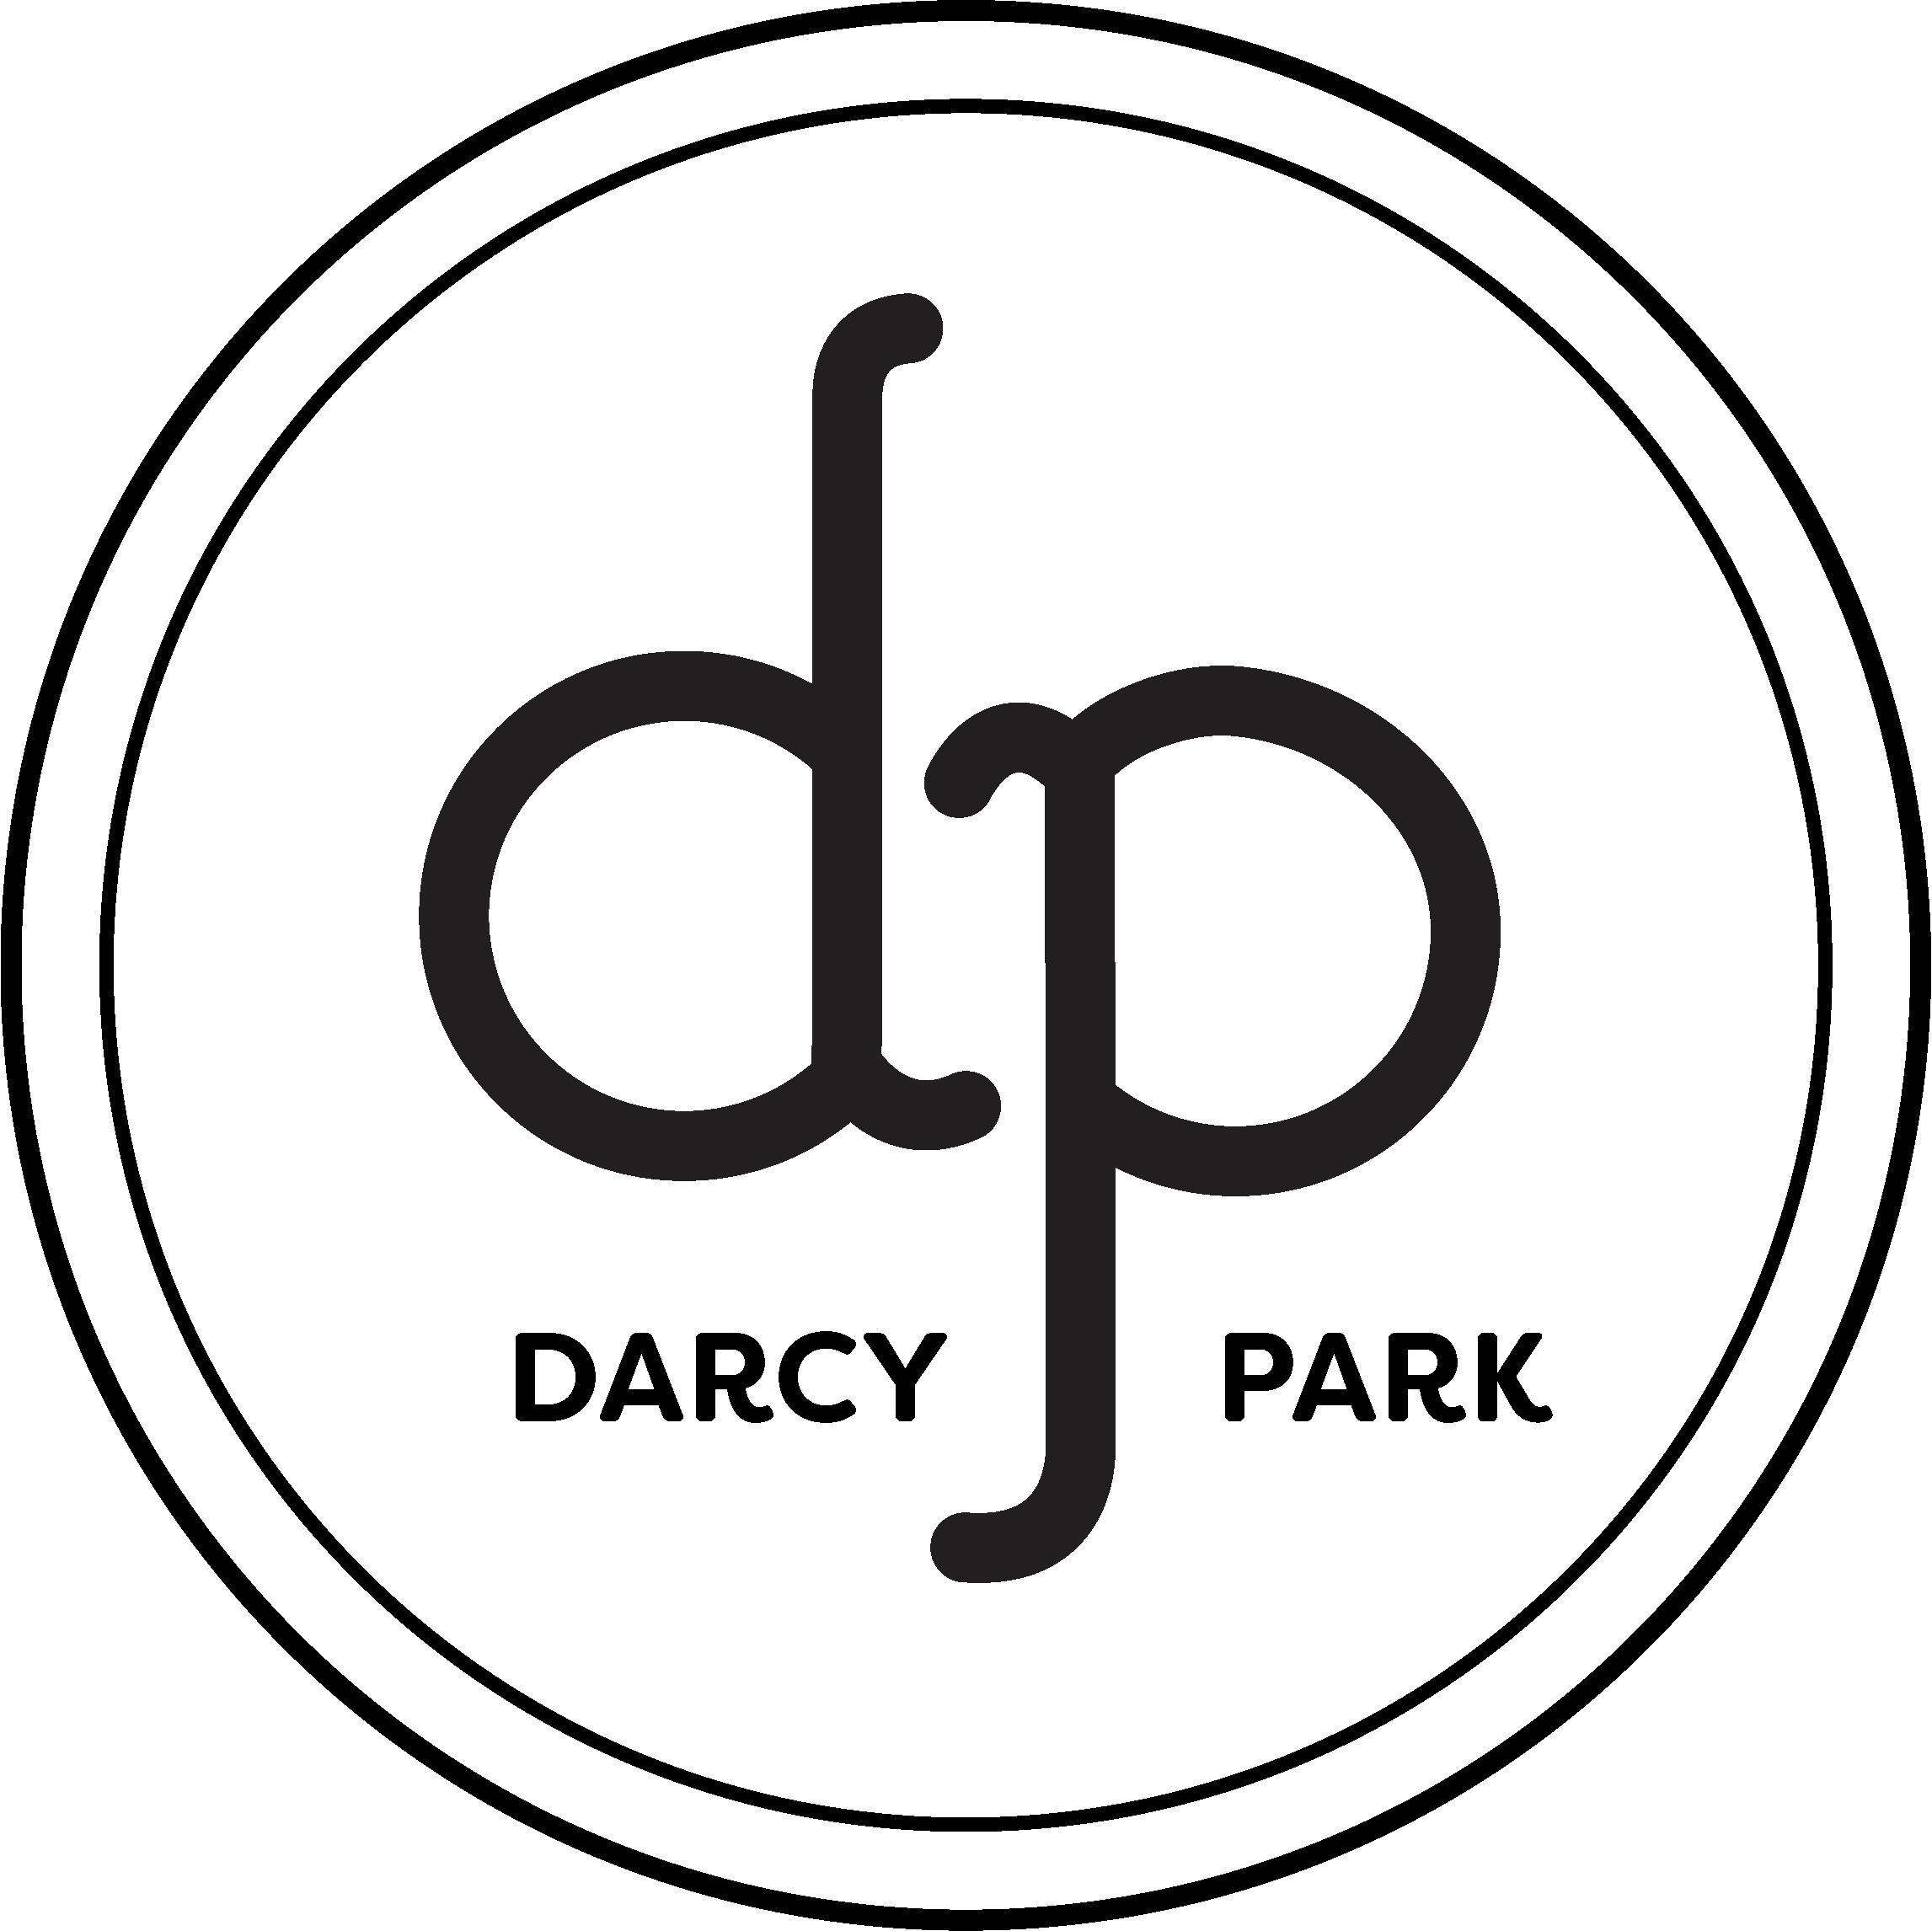 Darcy Park logo